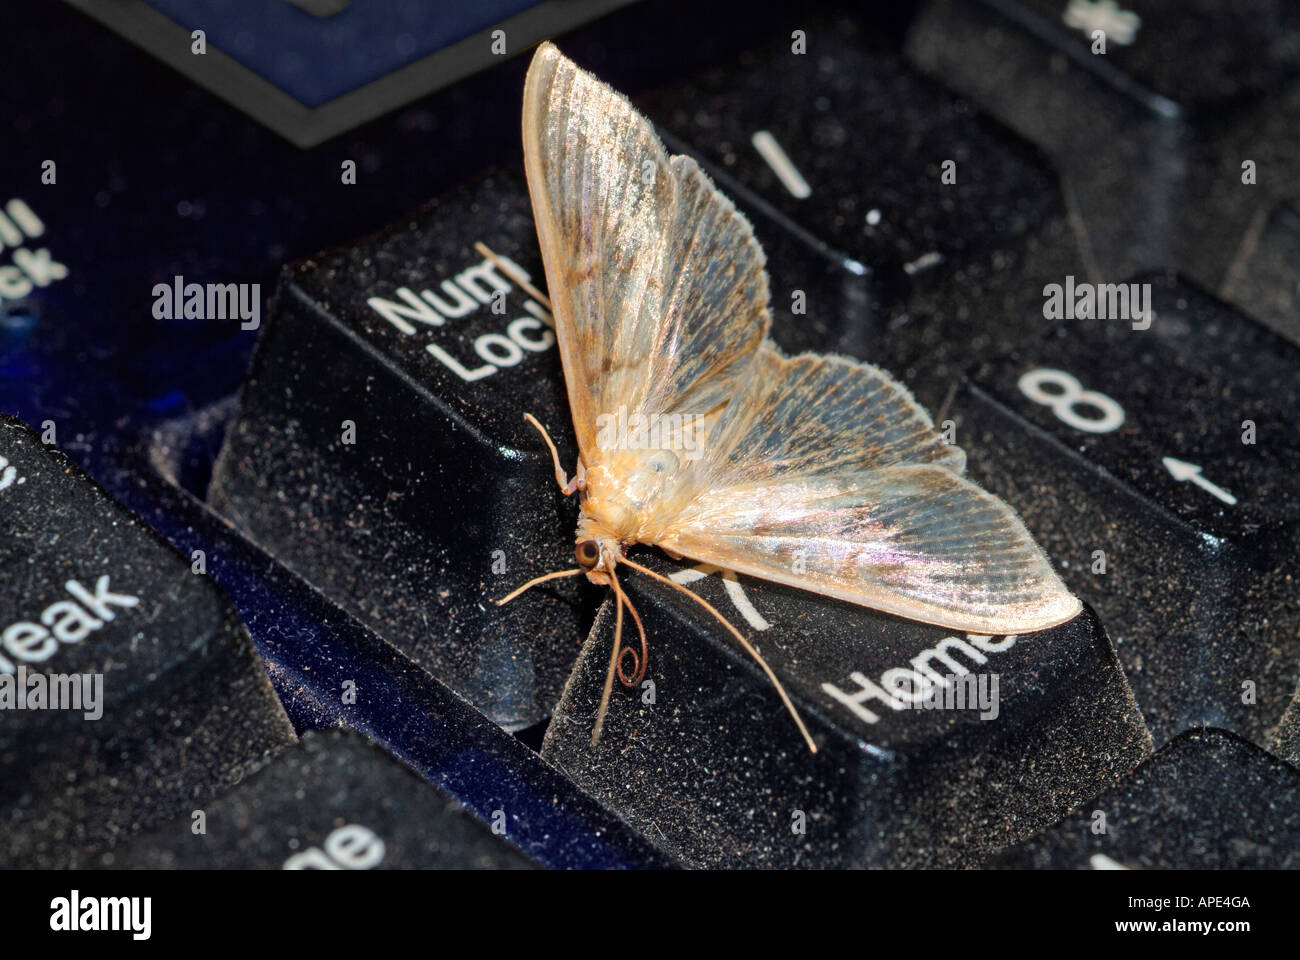 moth-on-computer-keyboard-APE4GA.jpg